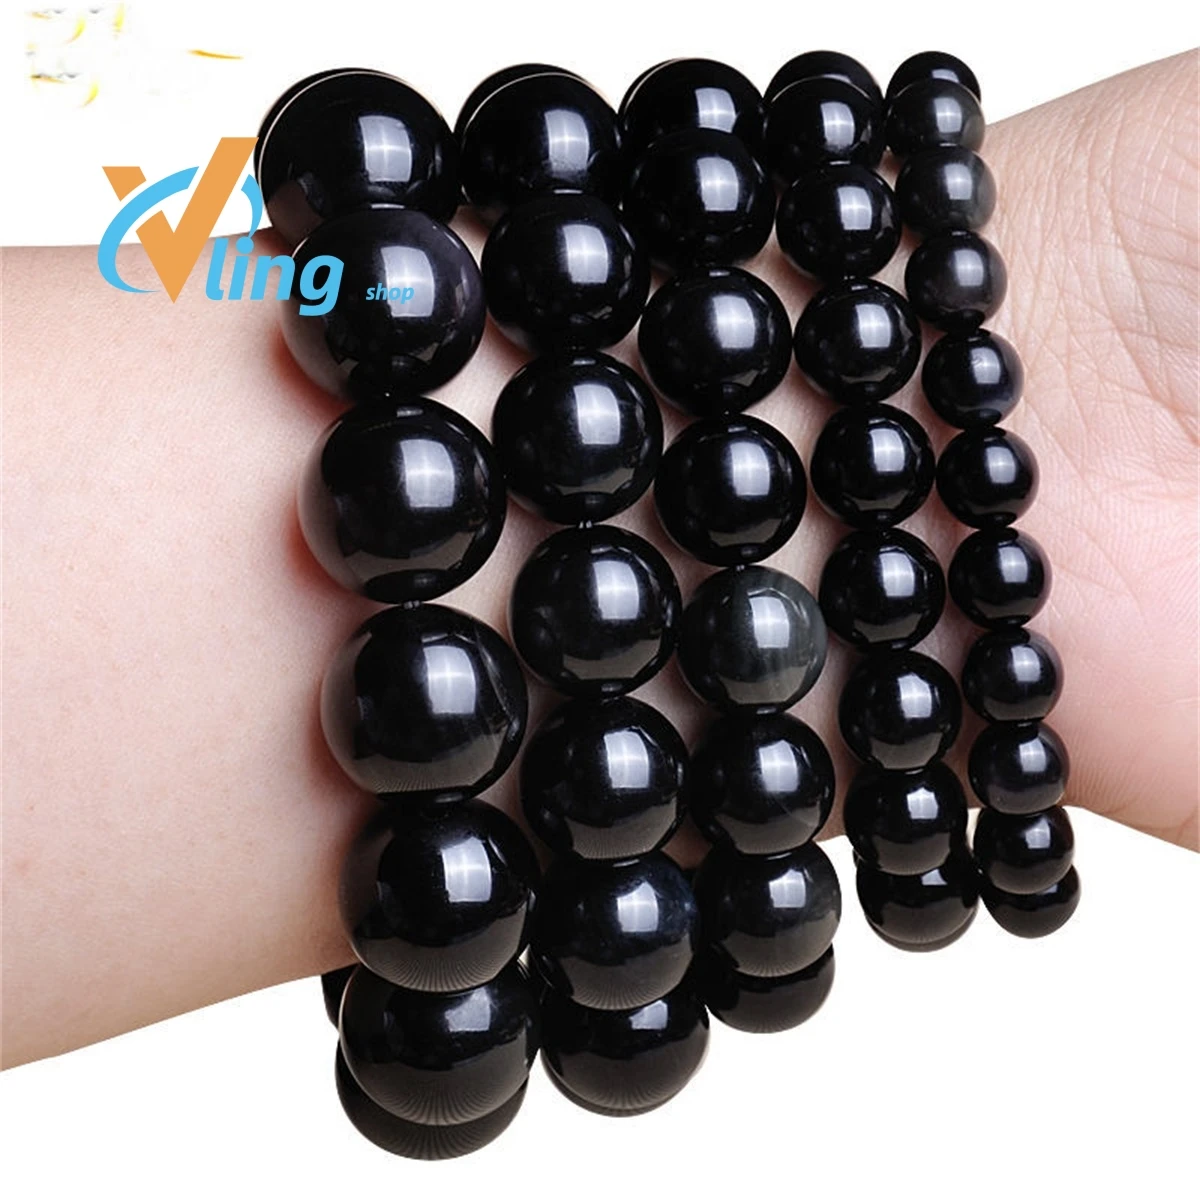 

Obsidian Ball Bracelet Wholesale 6-20mm Women's Men's Simple Versatile Fashion Gift Charm Retro ExquisiteEthnic Style Jewelry